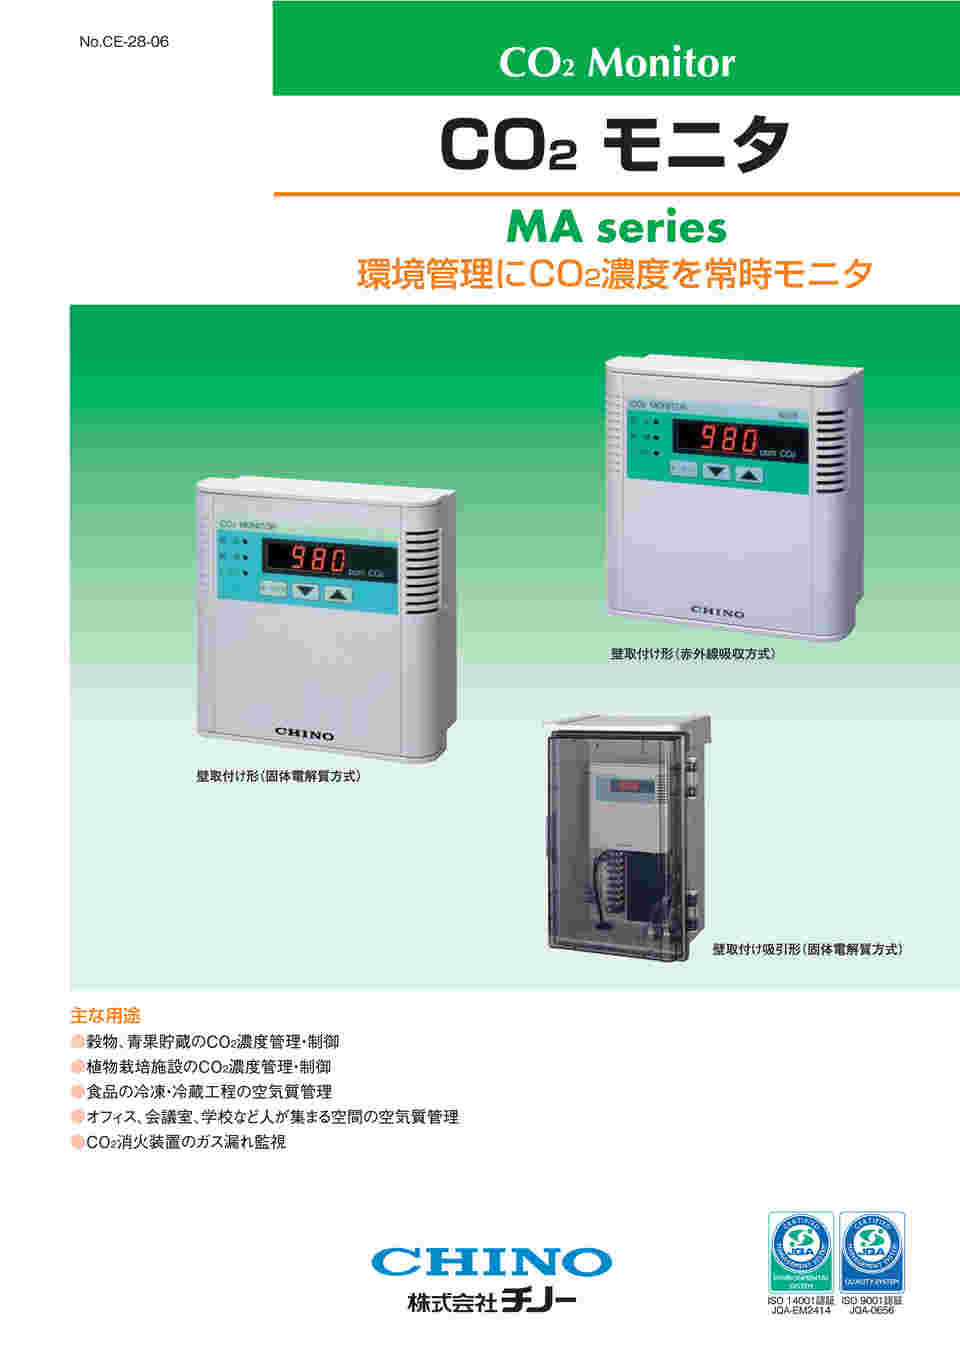 67-4913-79 MAseries 壁取付け形CO2モニタ コントロール機能付 赤外線